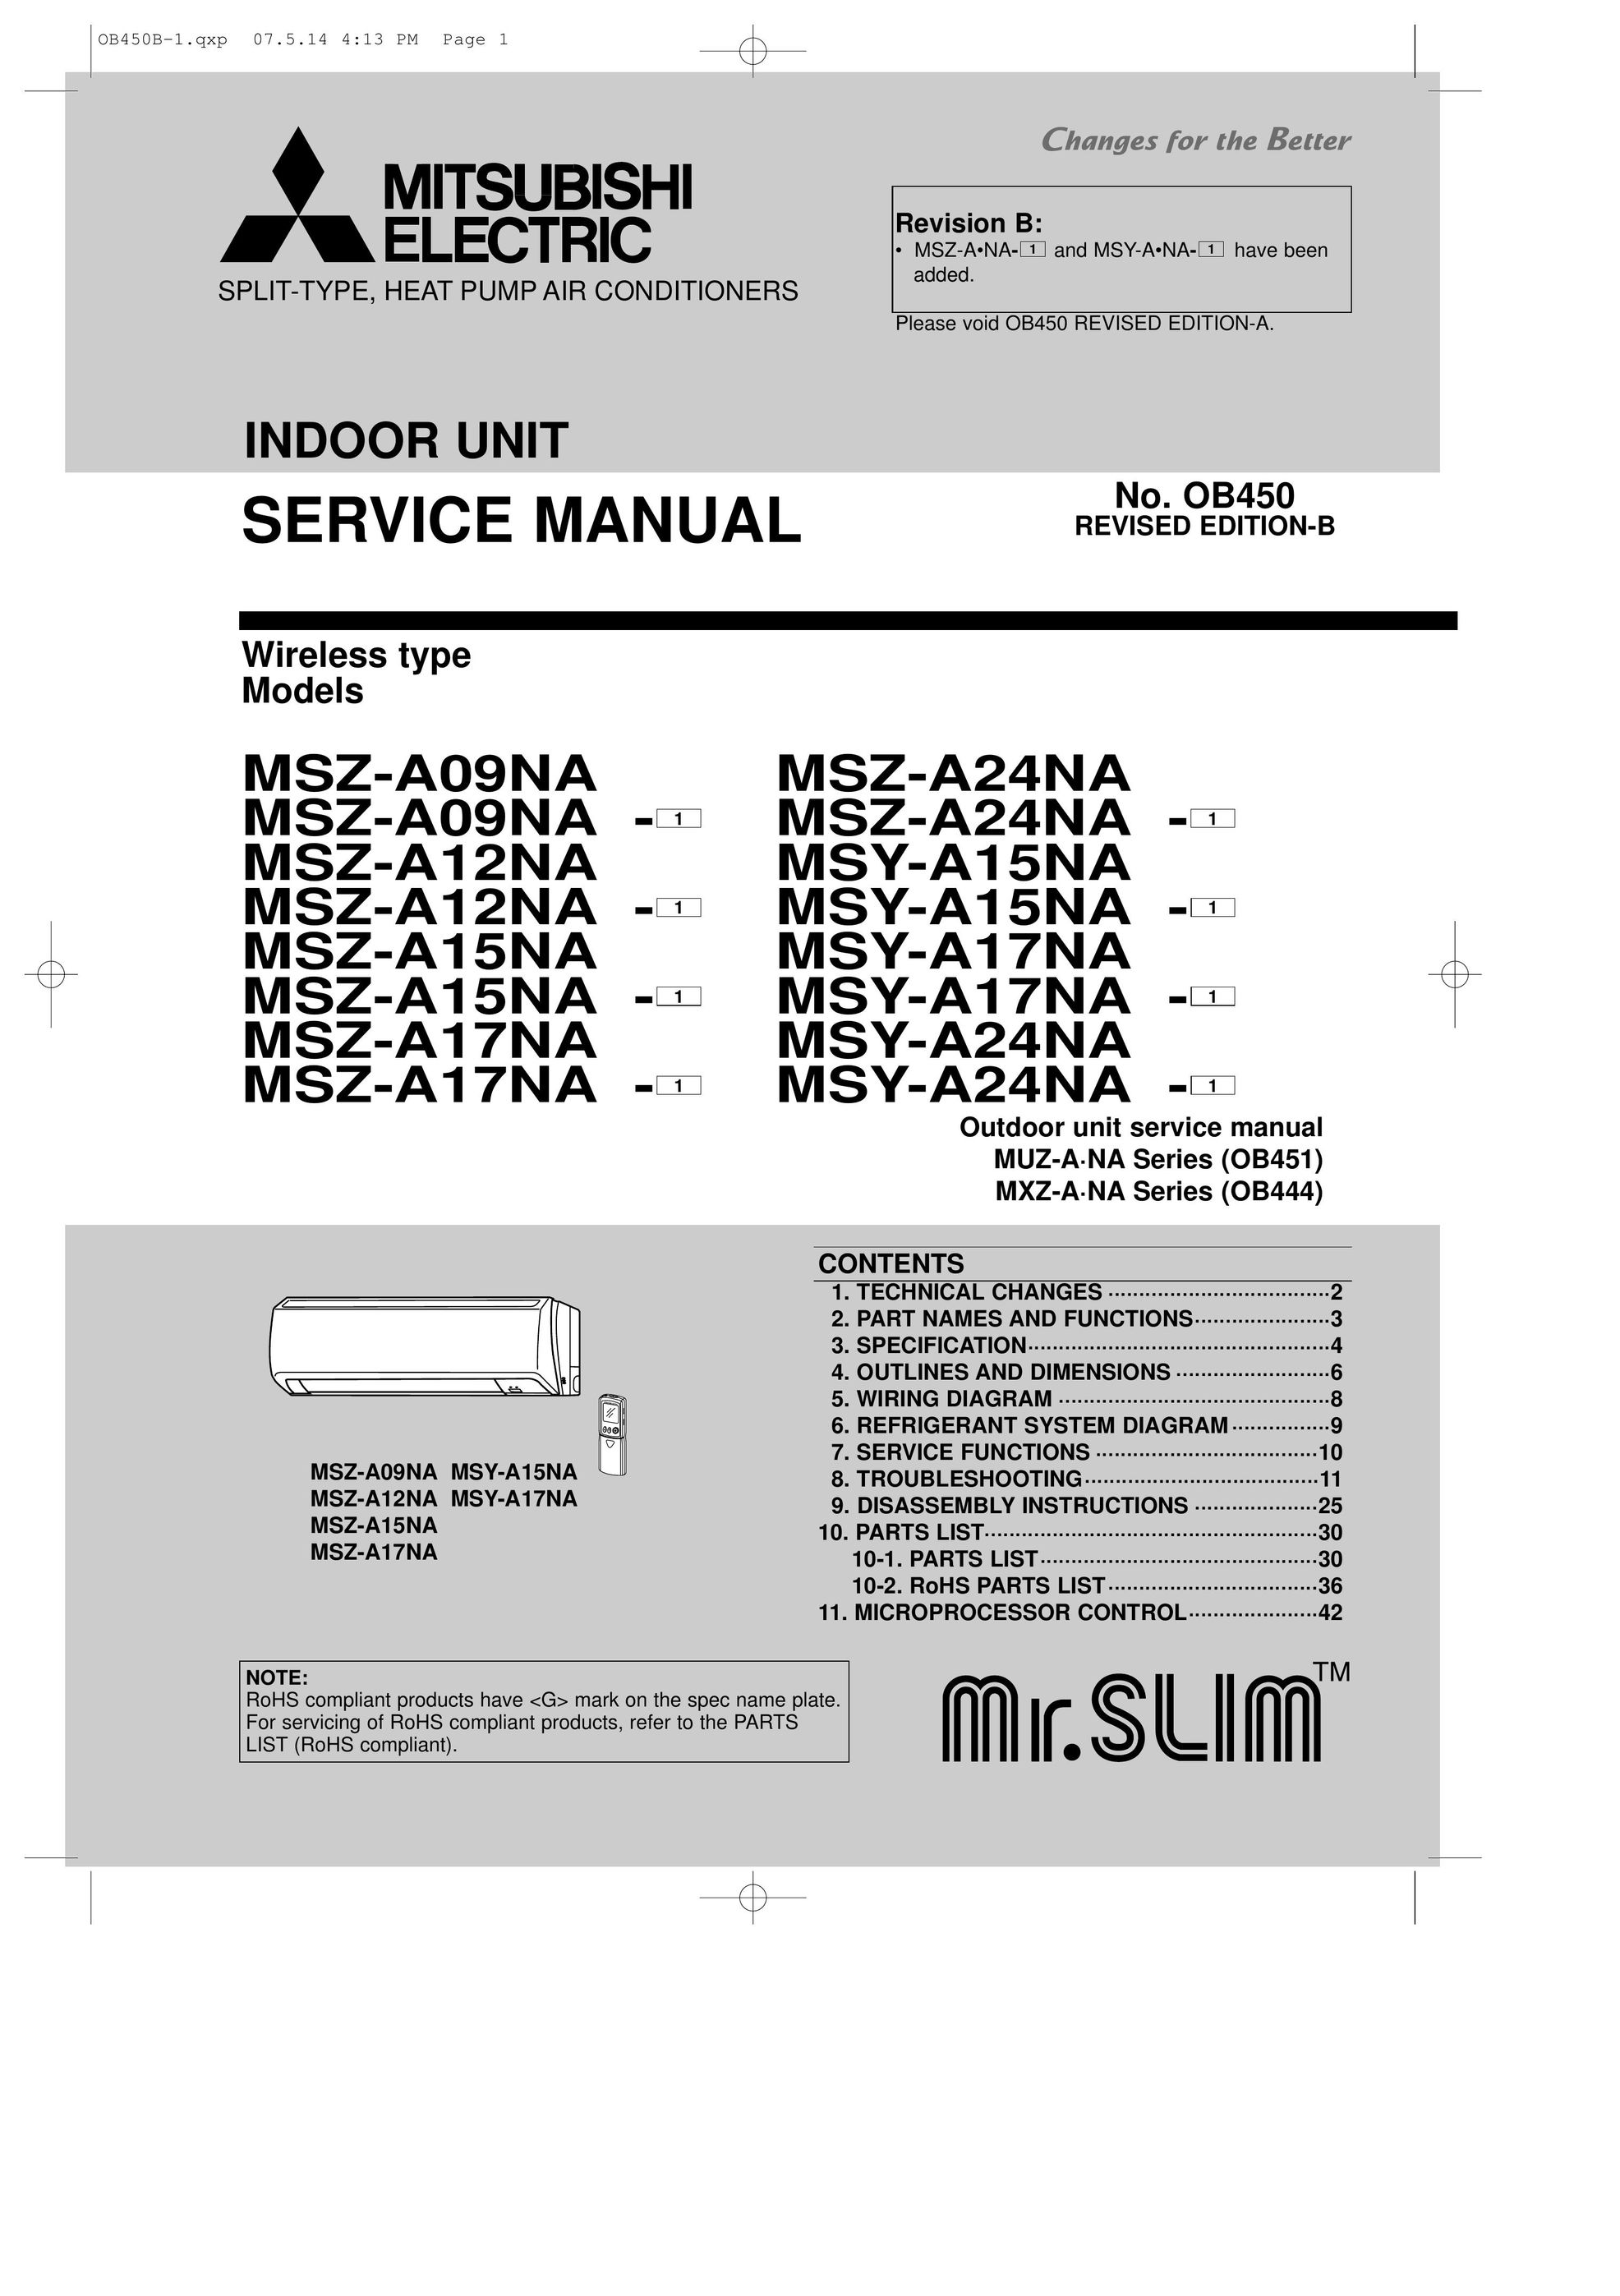 Mitsubishi Electronics MSZ-A12NA Heat Pump User Manual